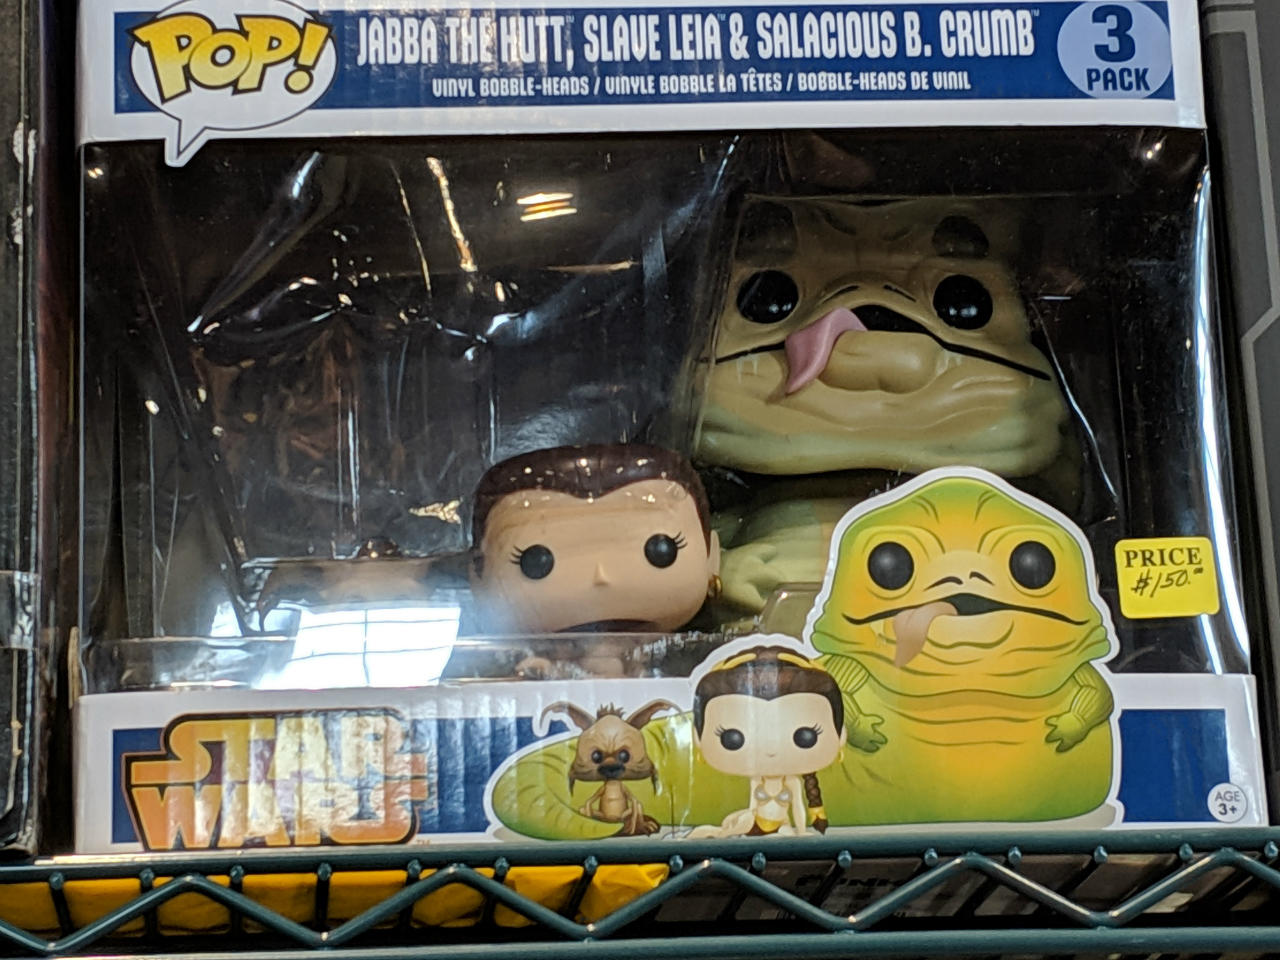 Jabba The Hutt, Slave Leia, and Salacious B. Crumb: $150